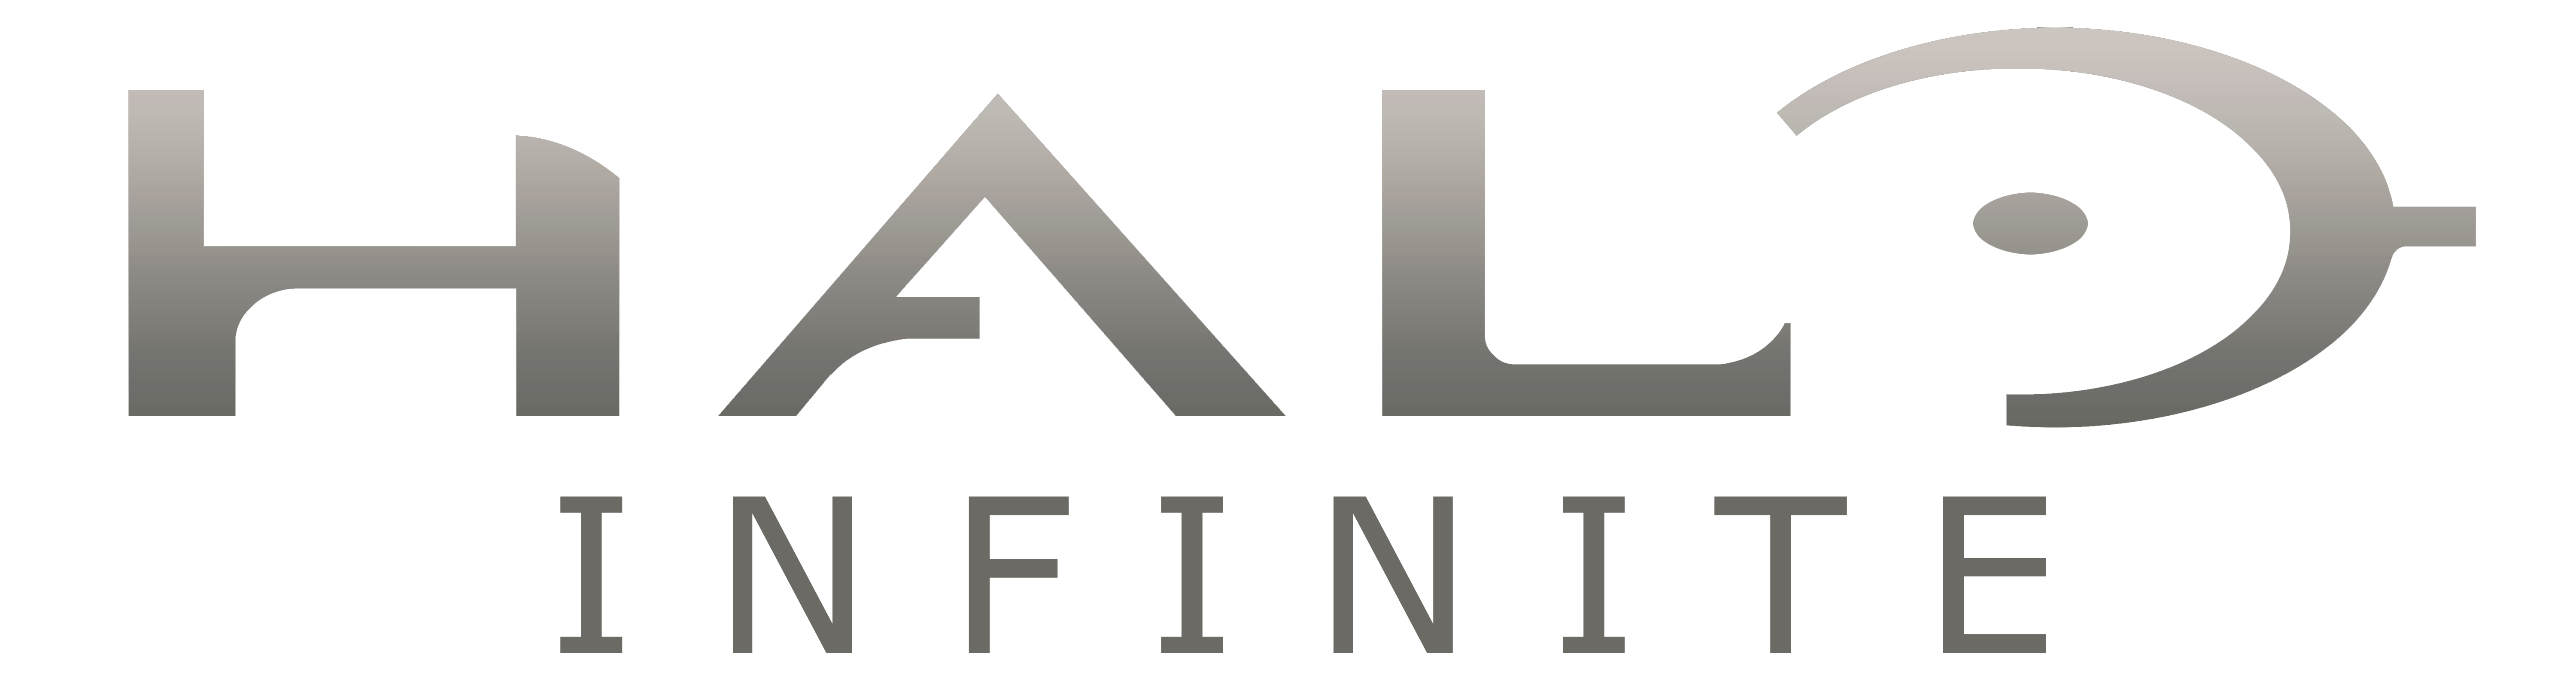 Halo Infinite Logo PNG Imahe